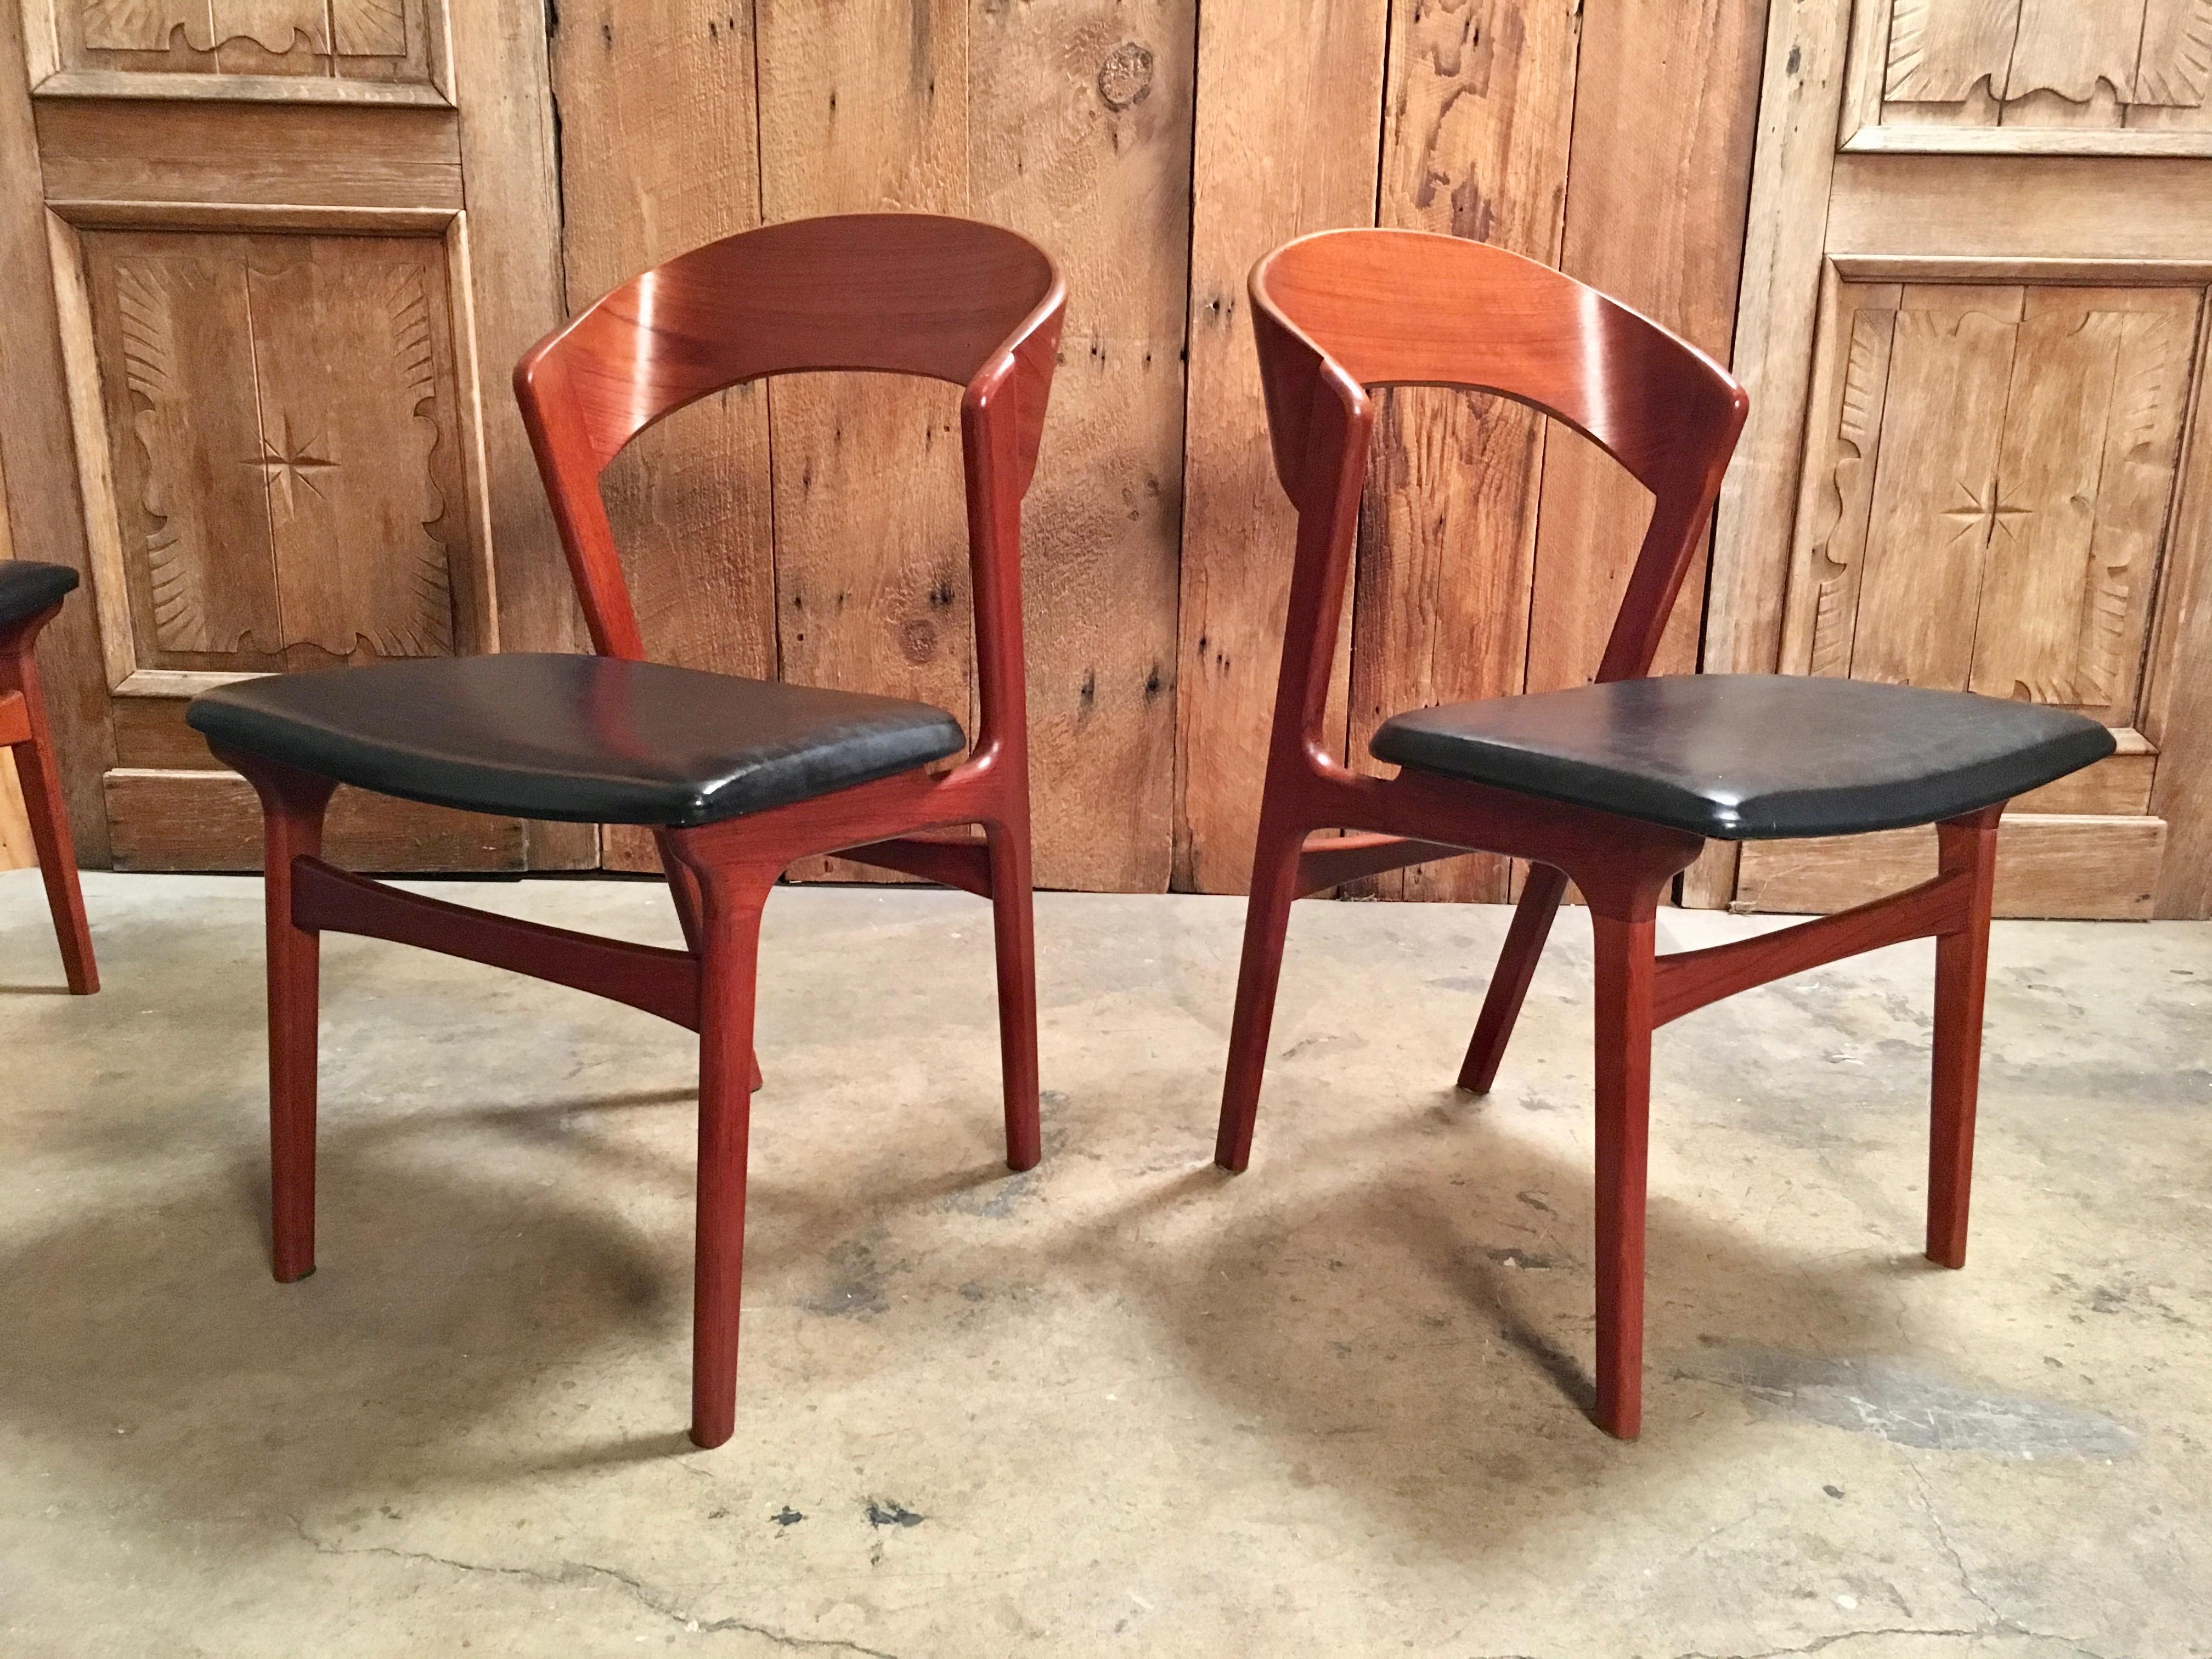  Sculptural Danish Modern Dining Chairs 1